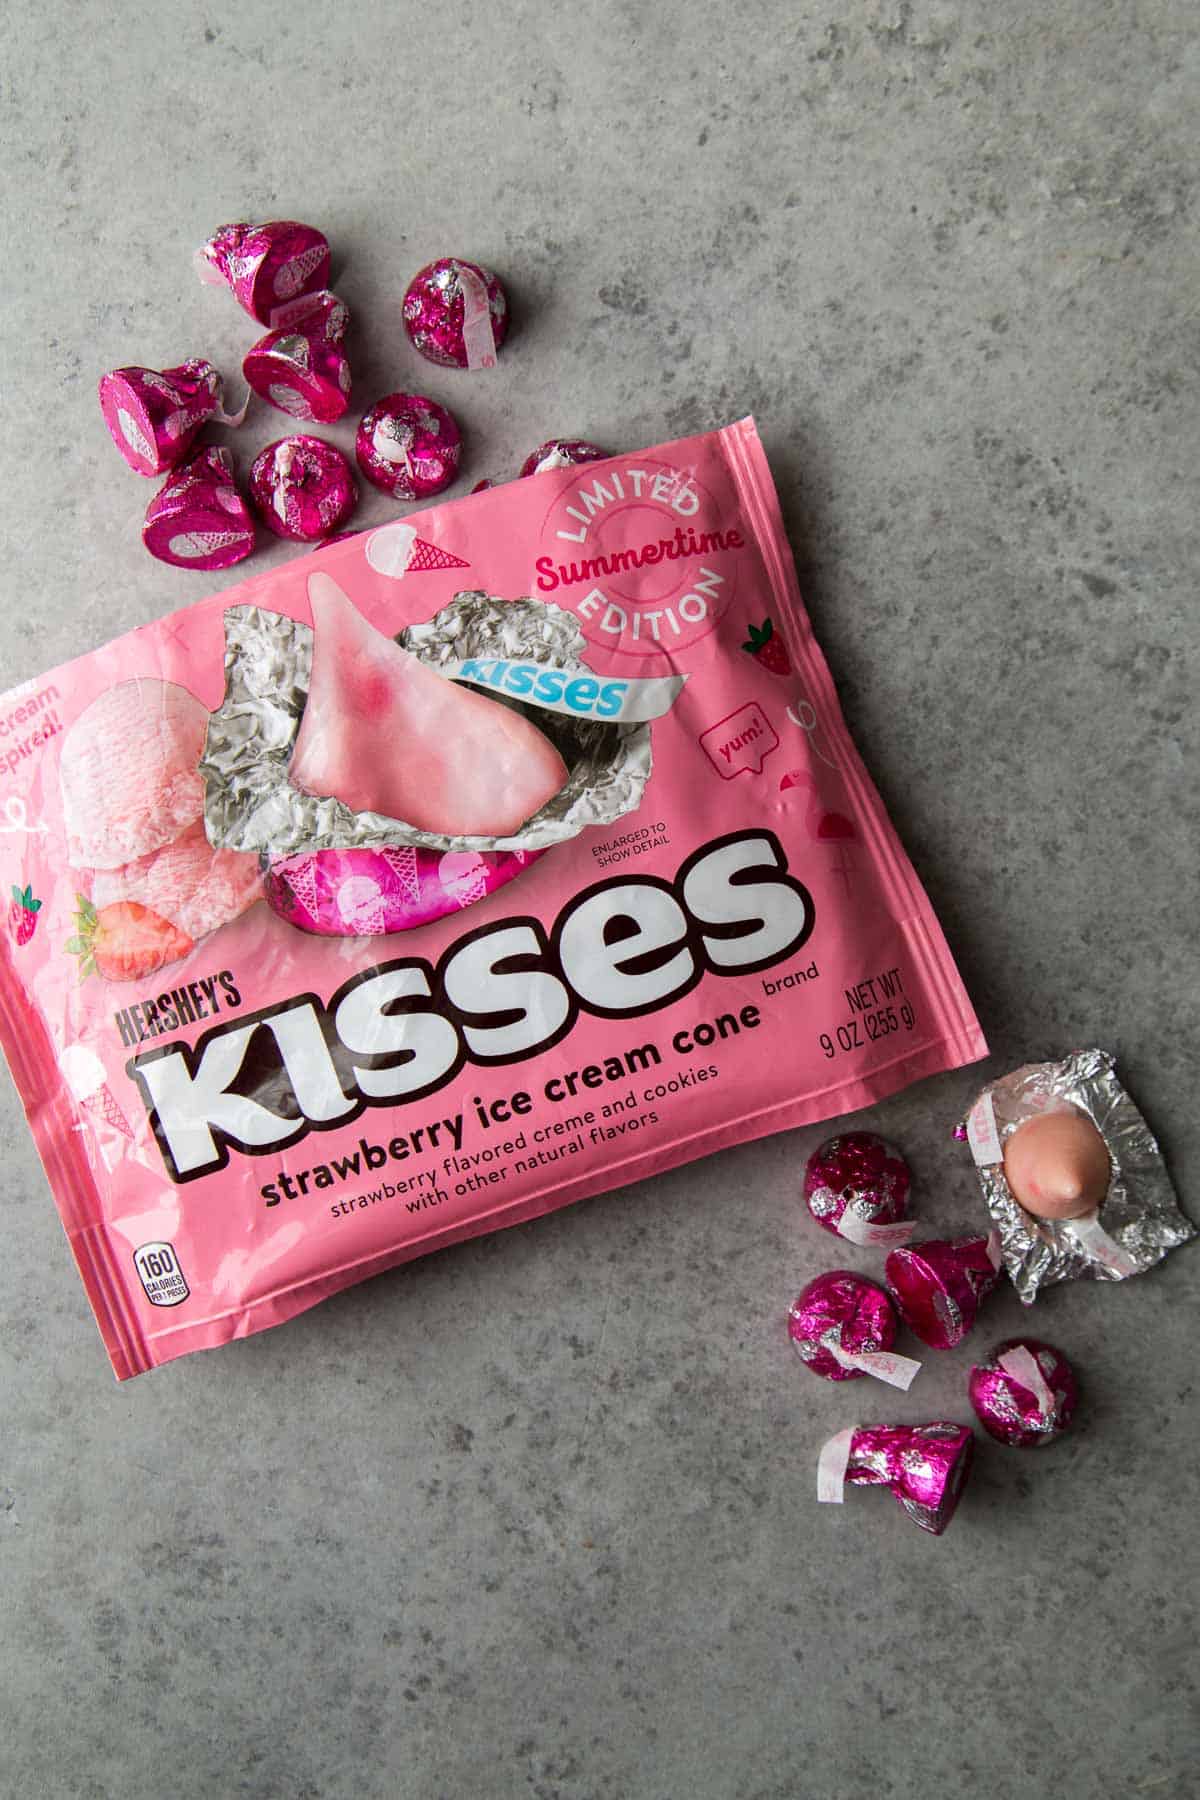 open bag of hershey's kisses strawberry ice cream cone flavor.